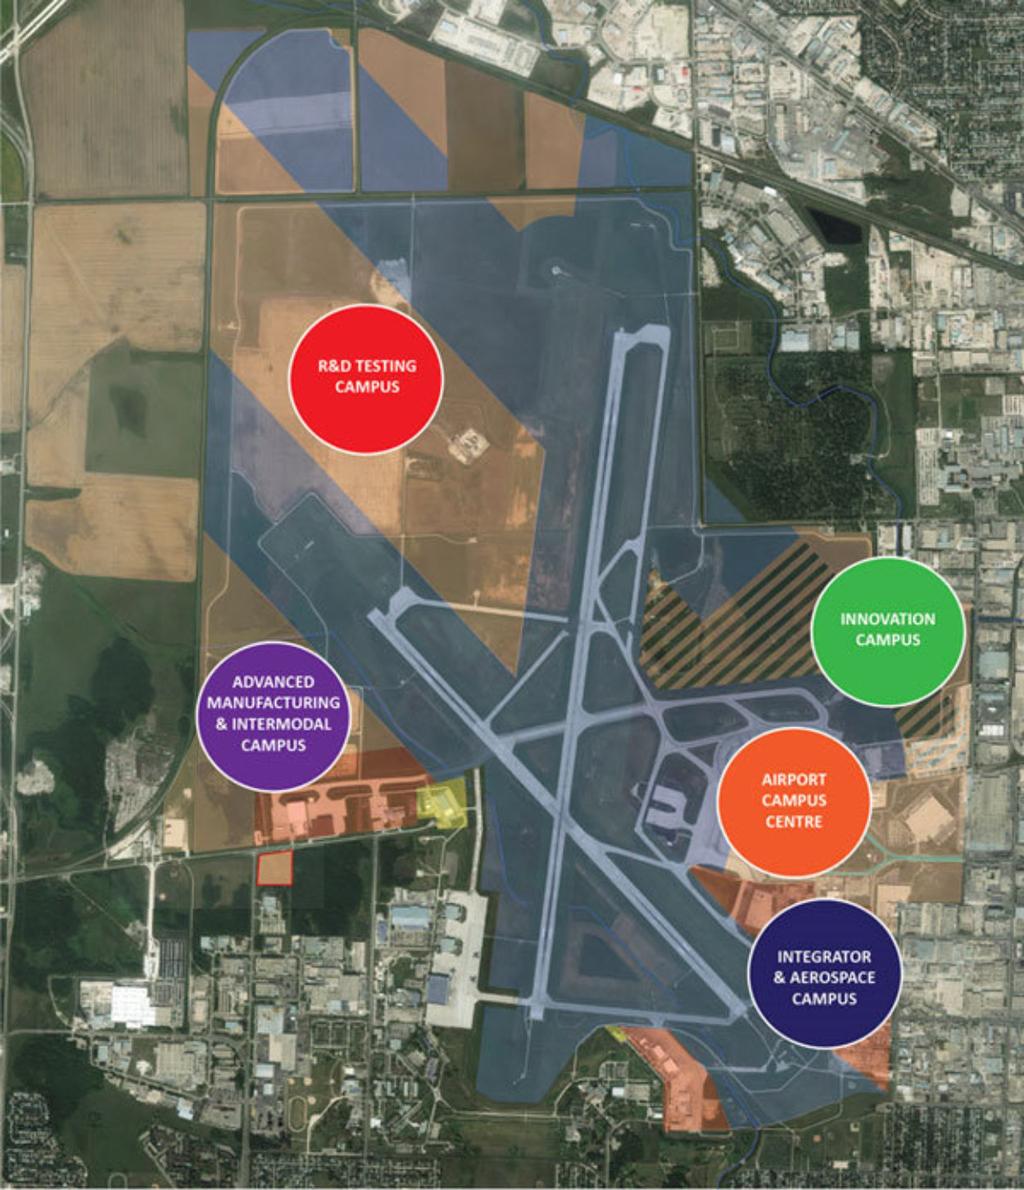 Figure 6-1: Airport Campus Development Plan 66